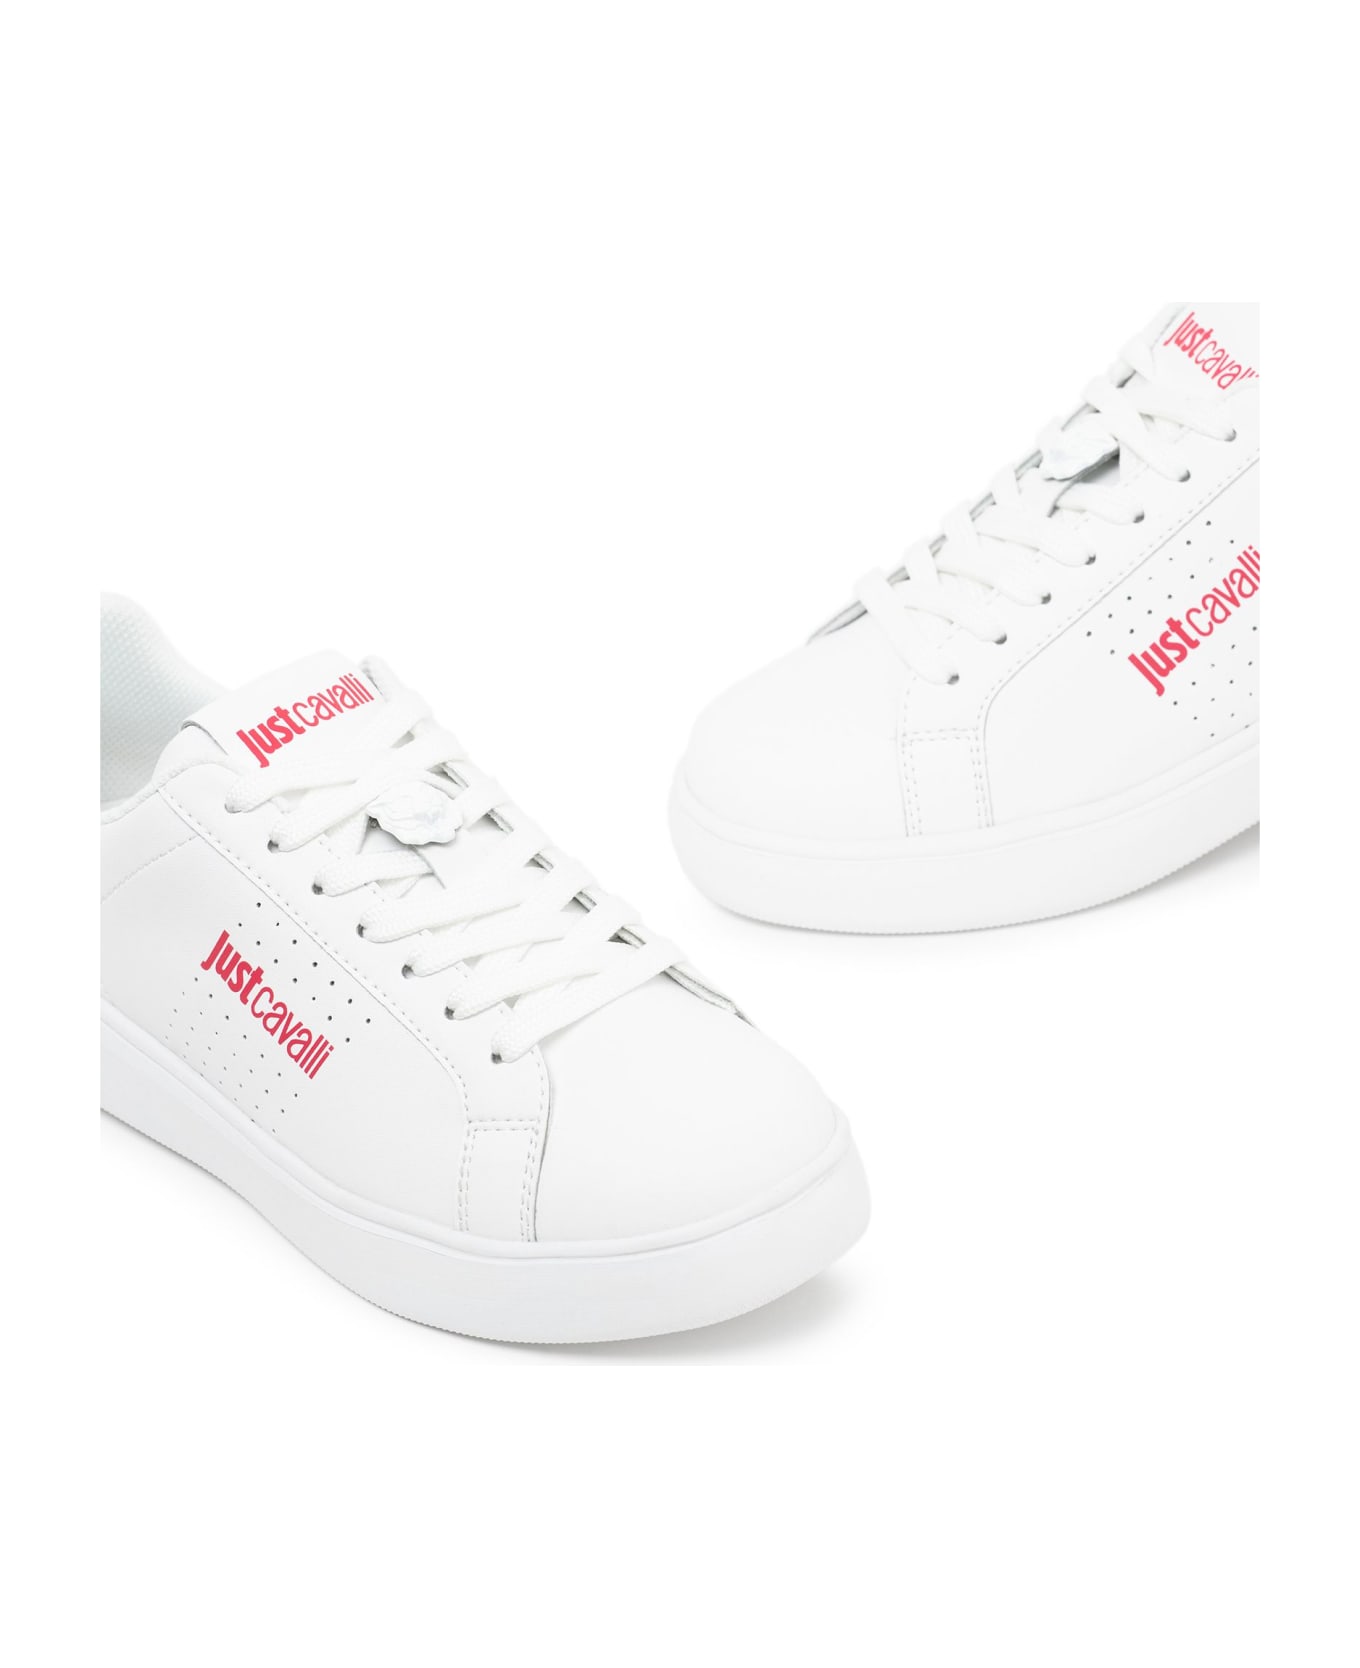 Just Cavalli Shoes - White スニーカー